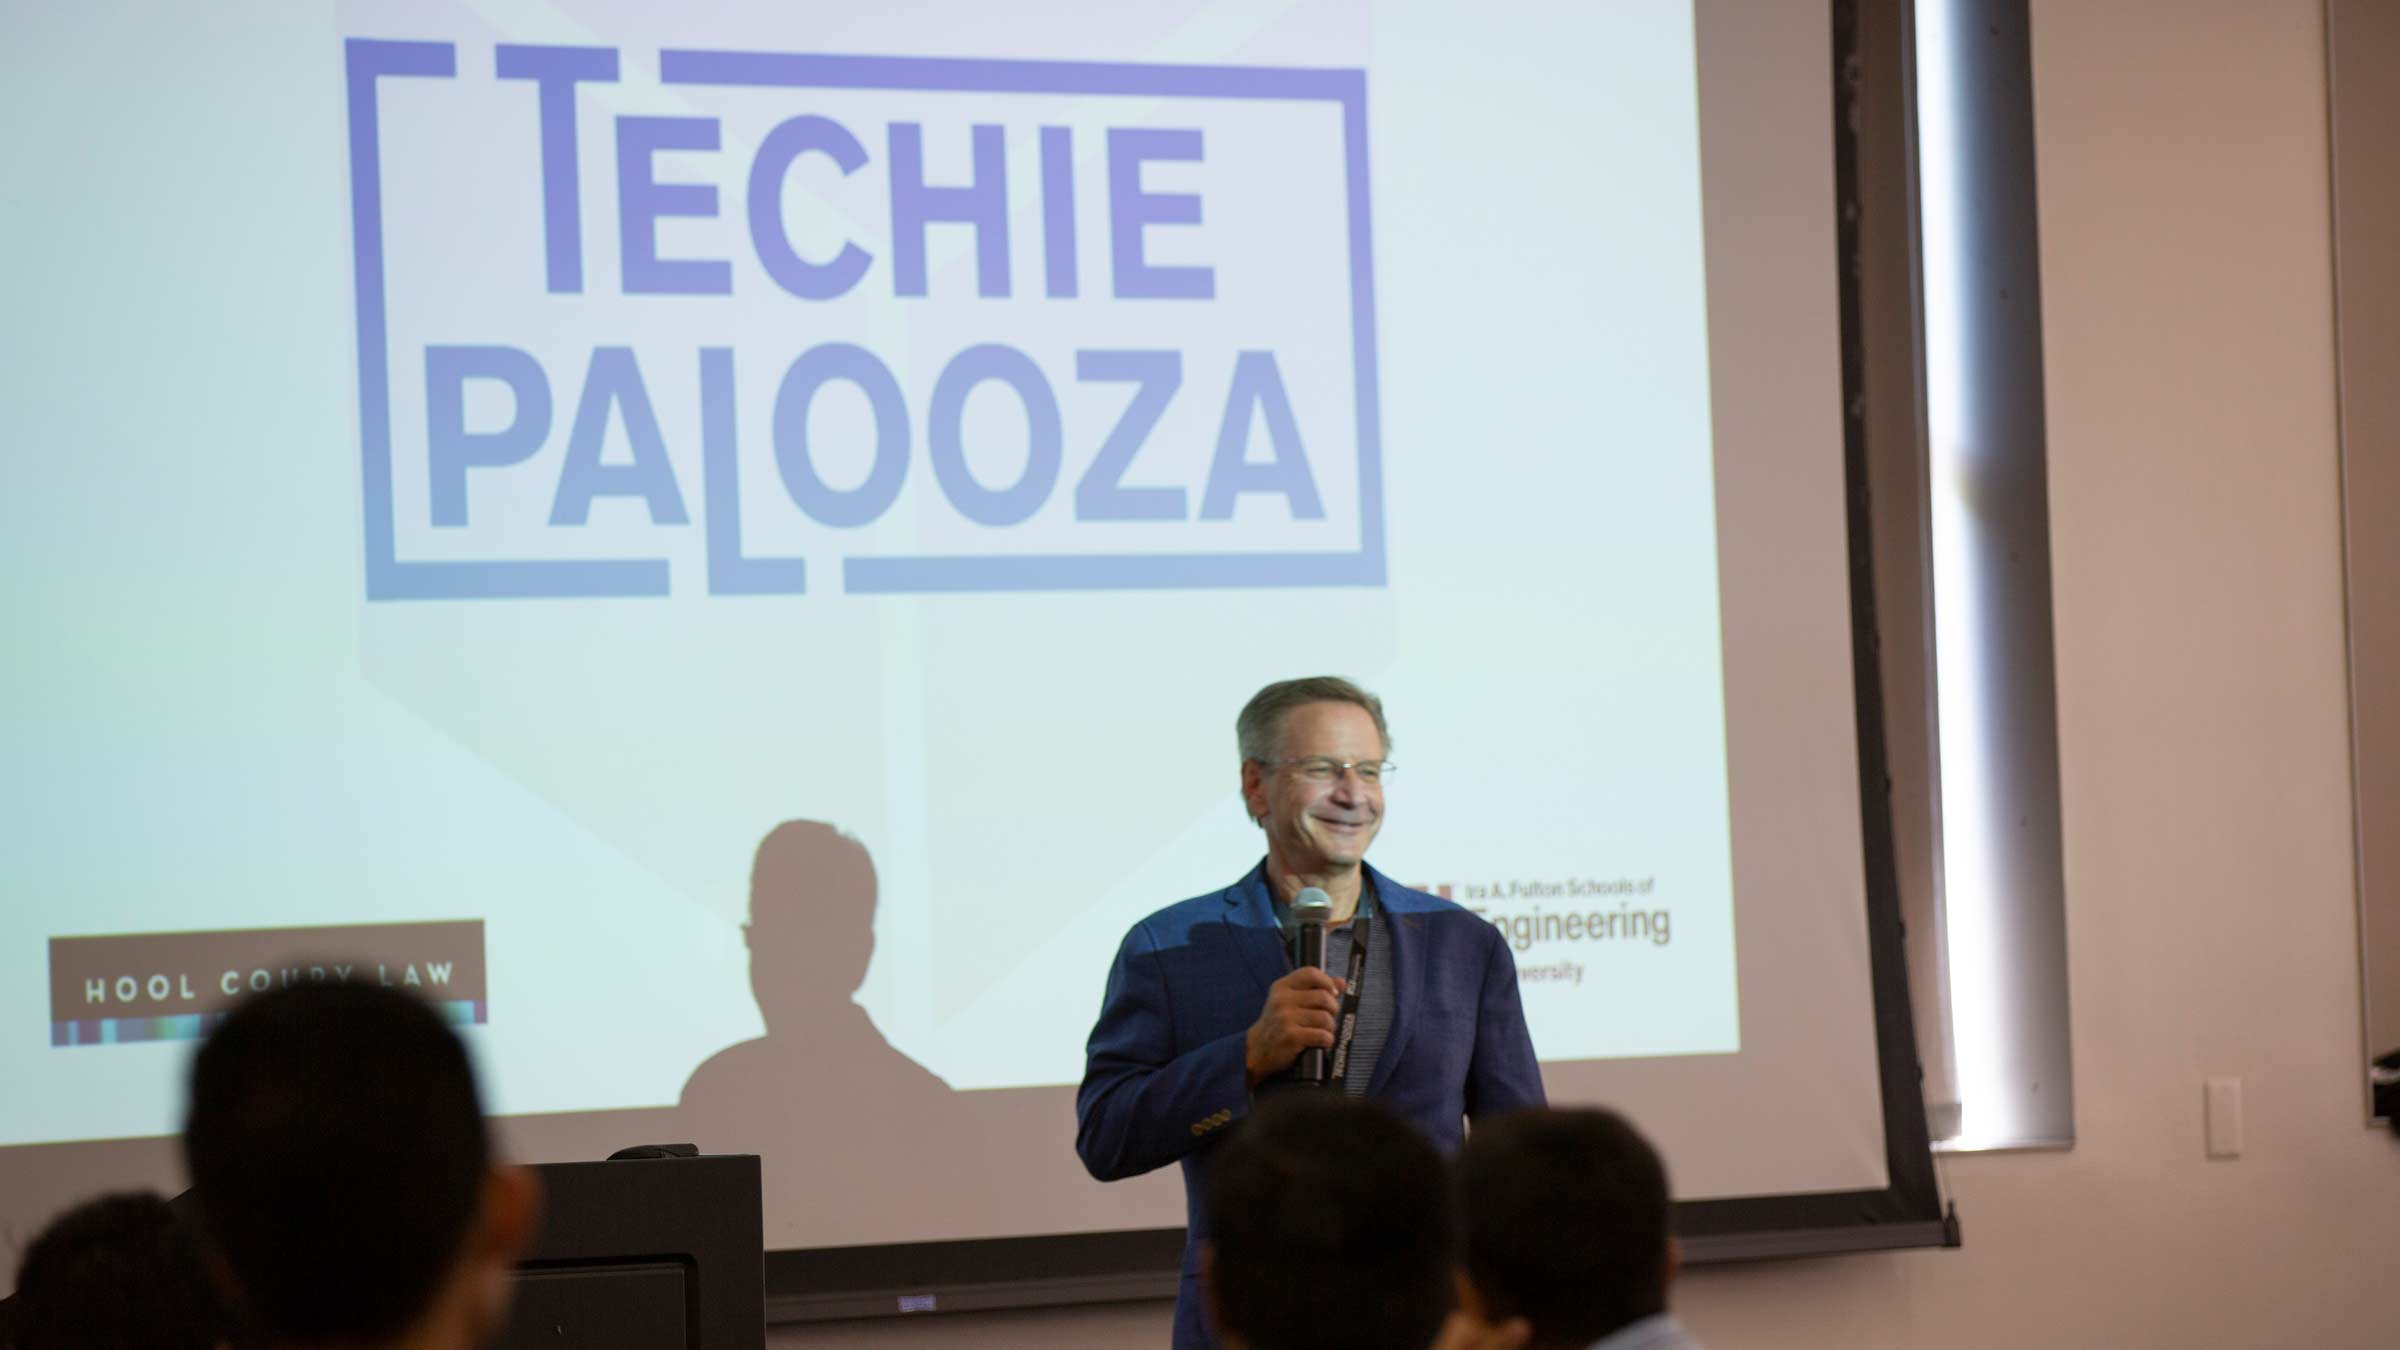 Michael Hool speaking at Techiepalooza 2022